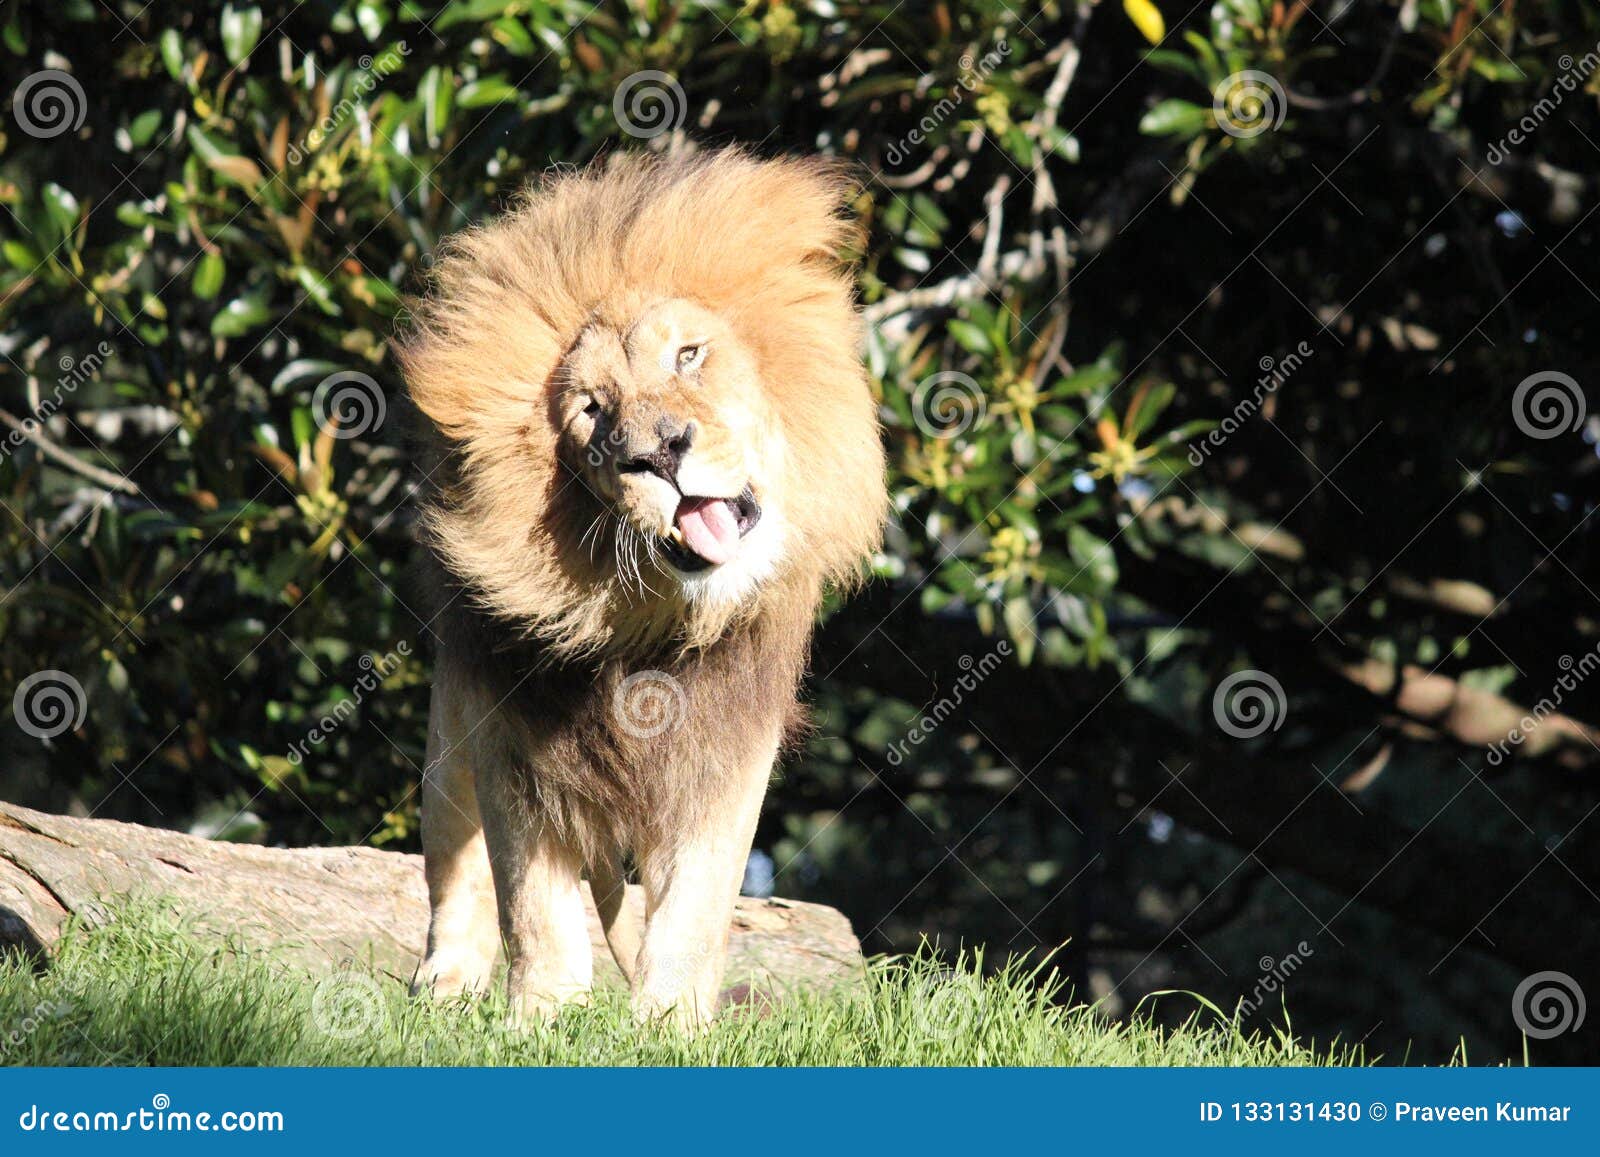 Crazy lion hair